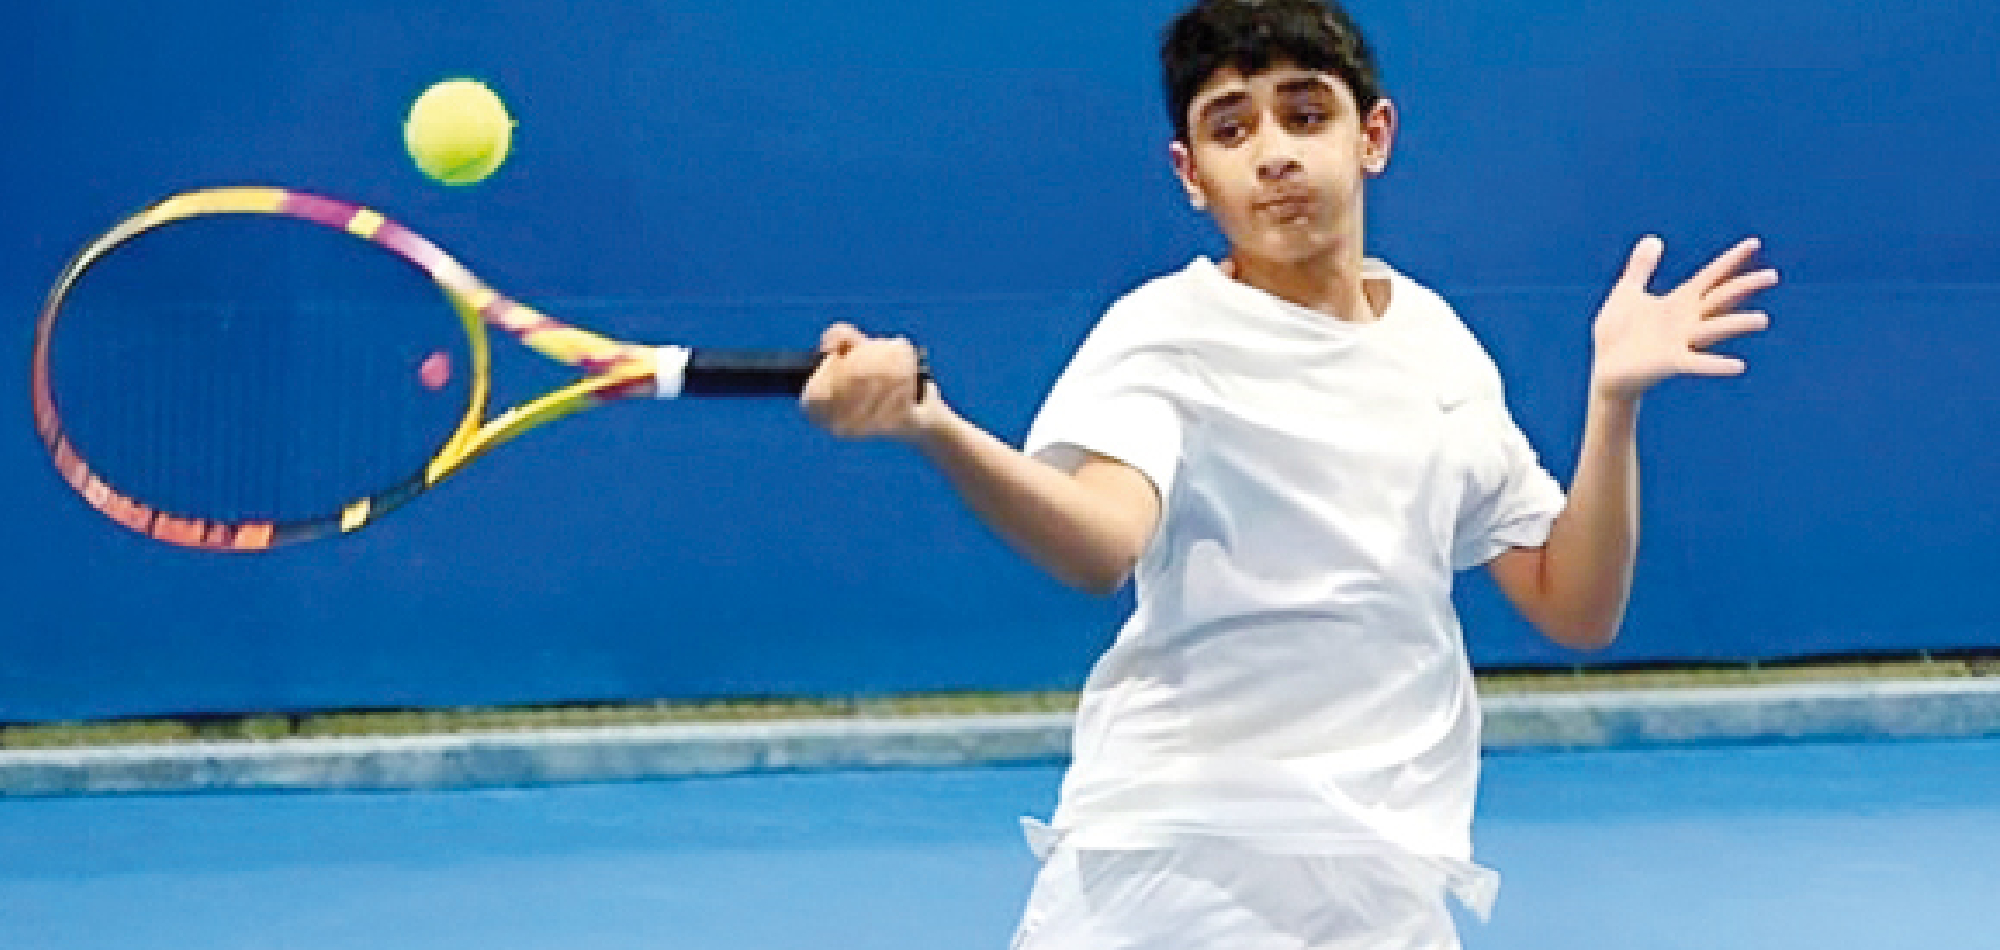 Abdullah advances at Qatar Asian Junior Tennis tourney